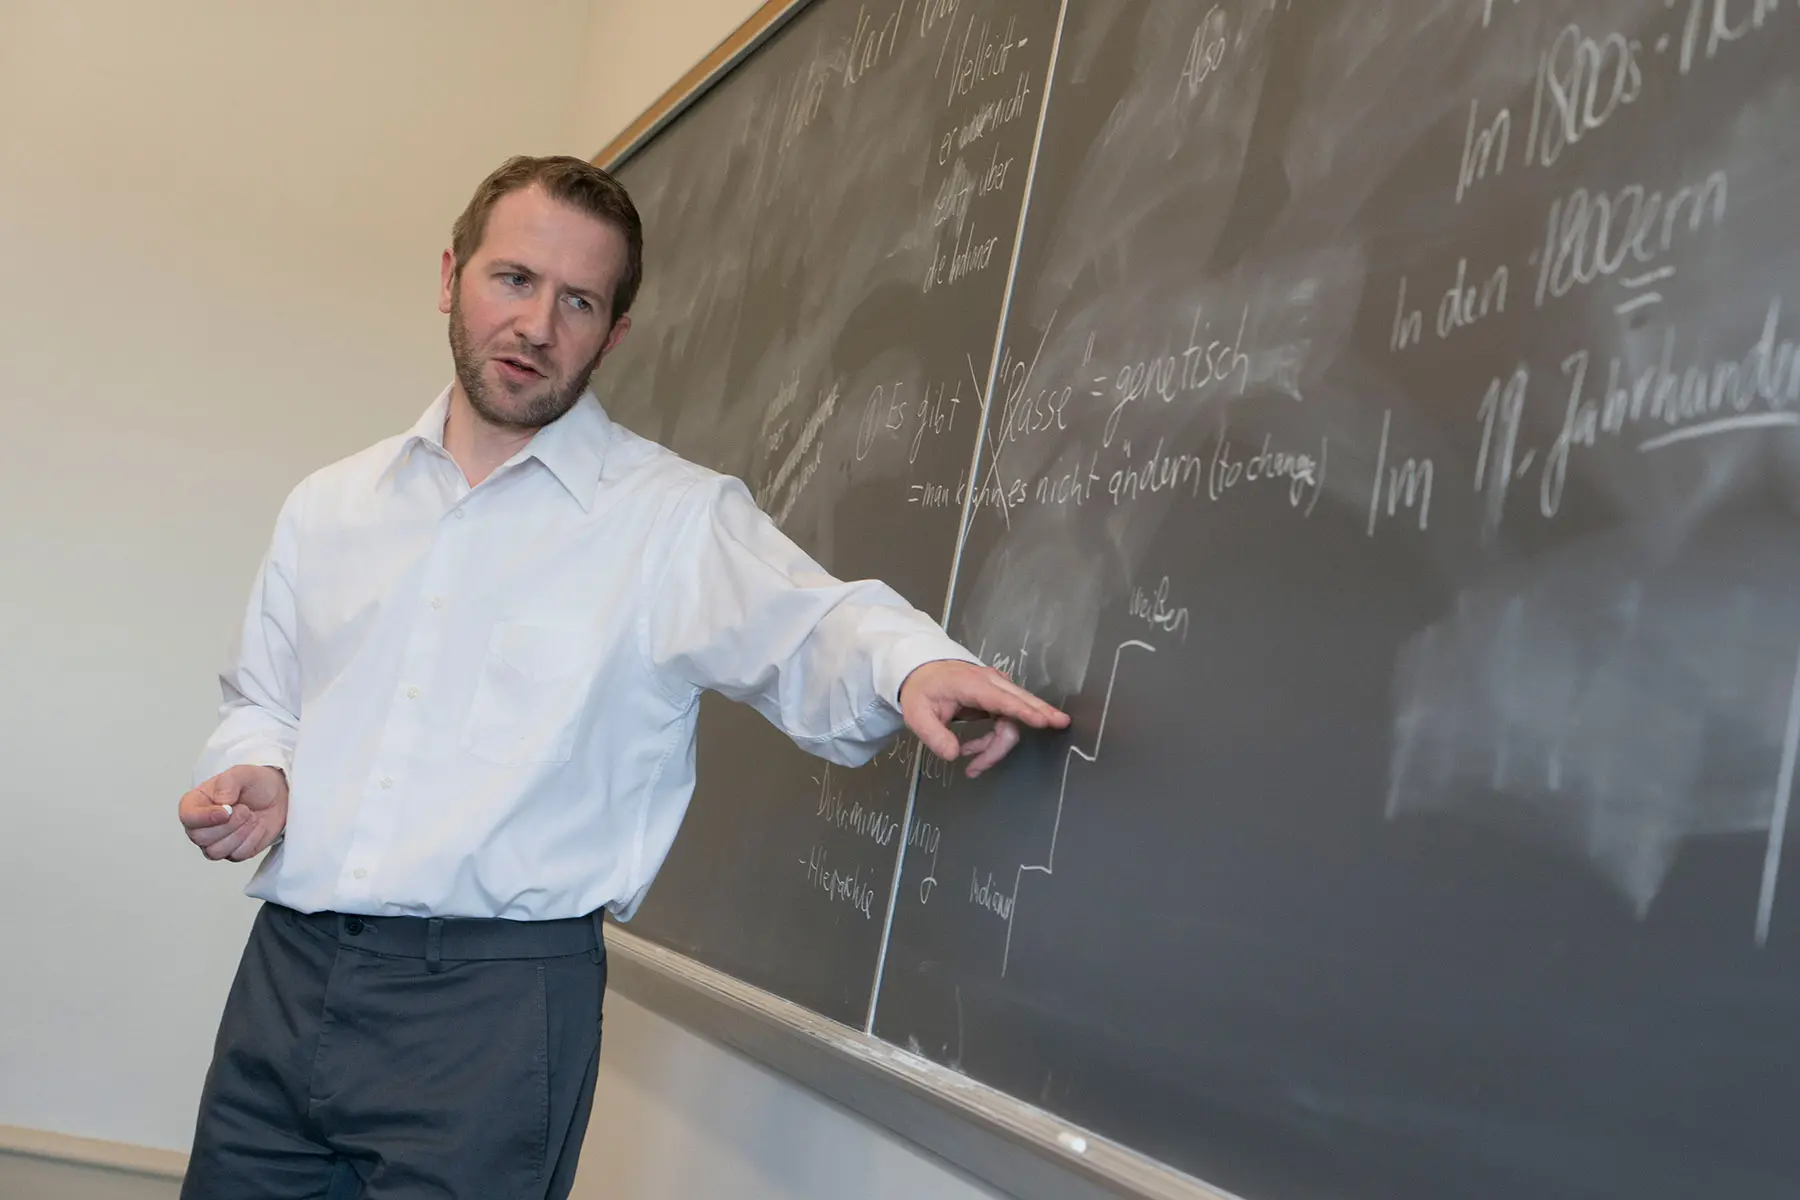 Professor pointing to German sentence on chalkboard